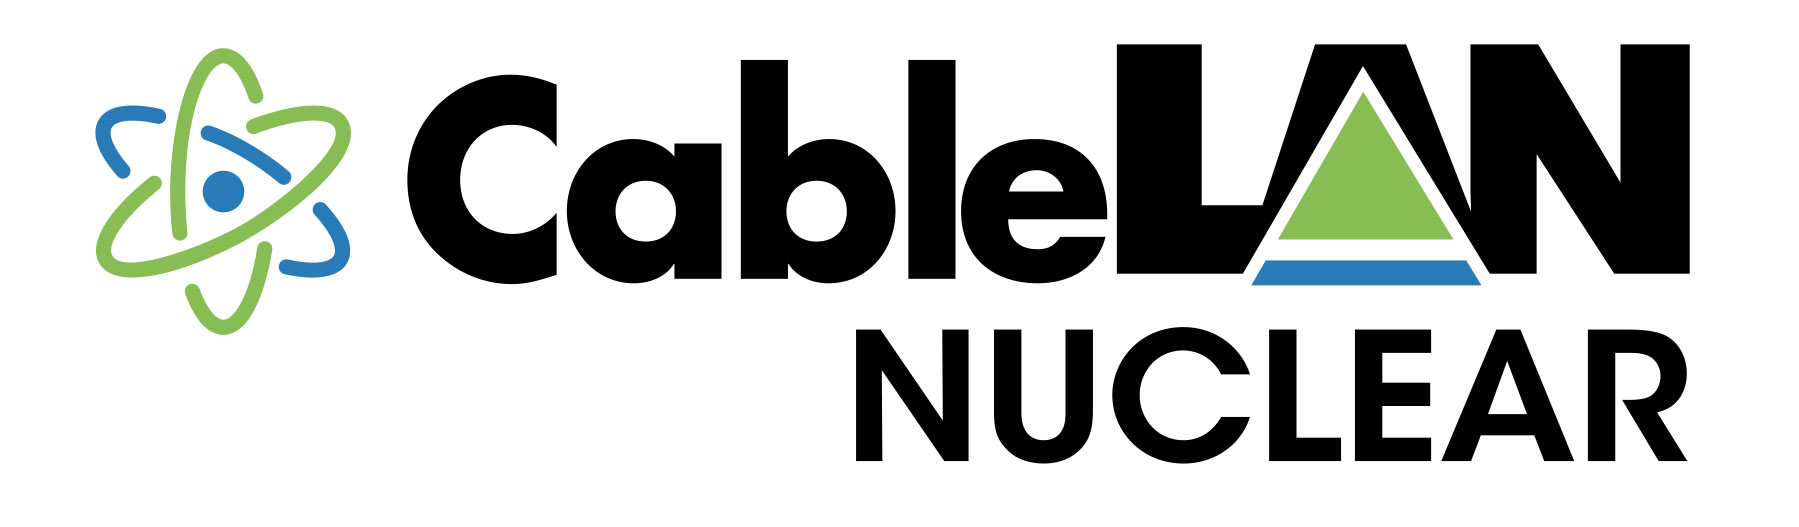 CableLAN Nuclear, Inc. logo